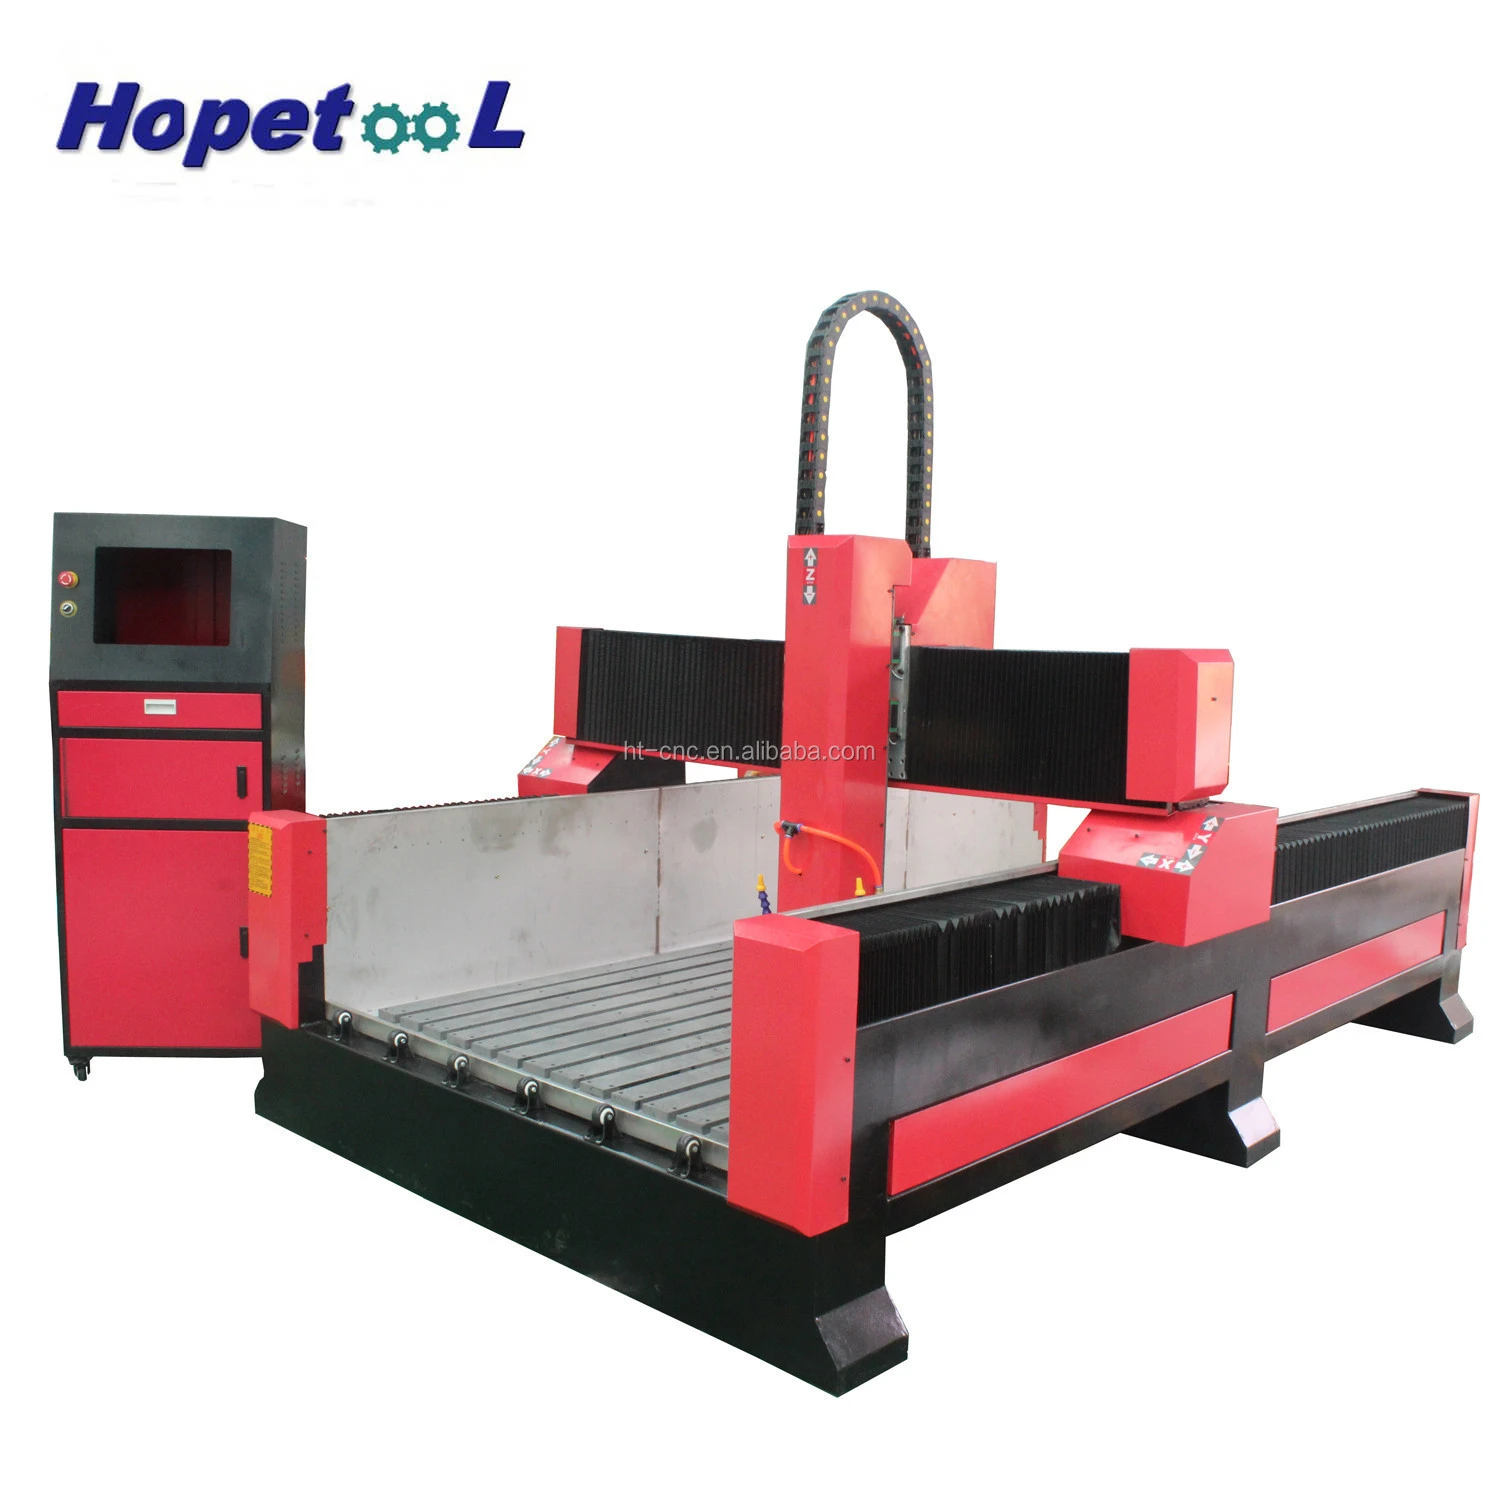 High precision advantage used stone cutting machine for sale